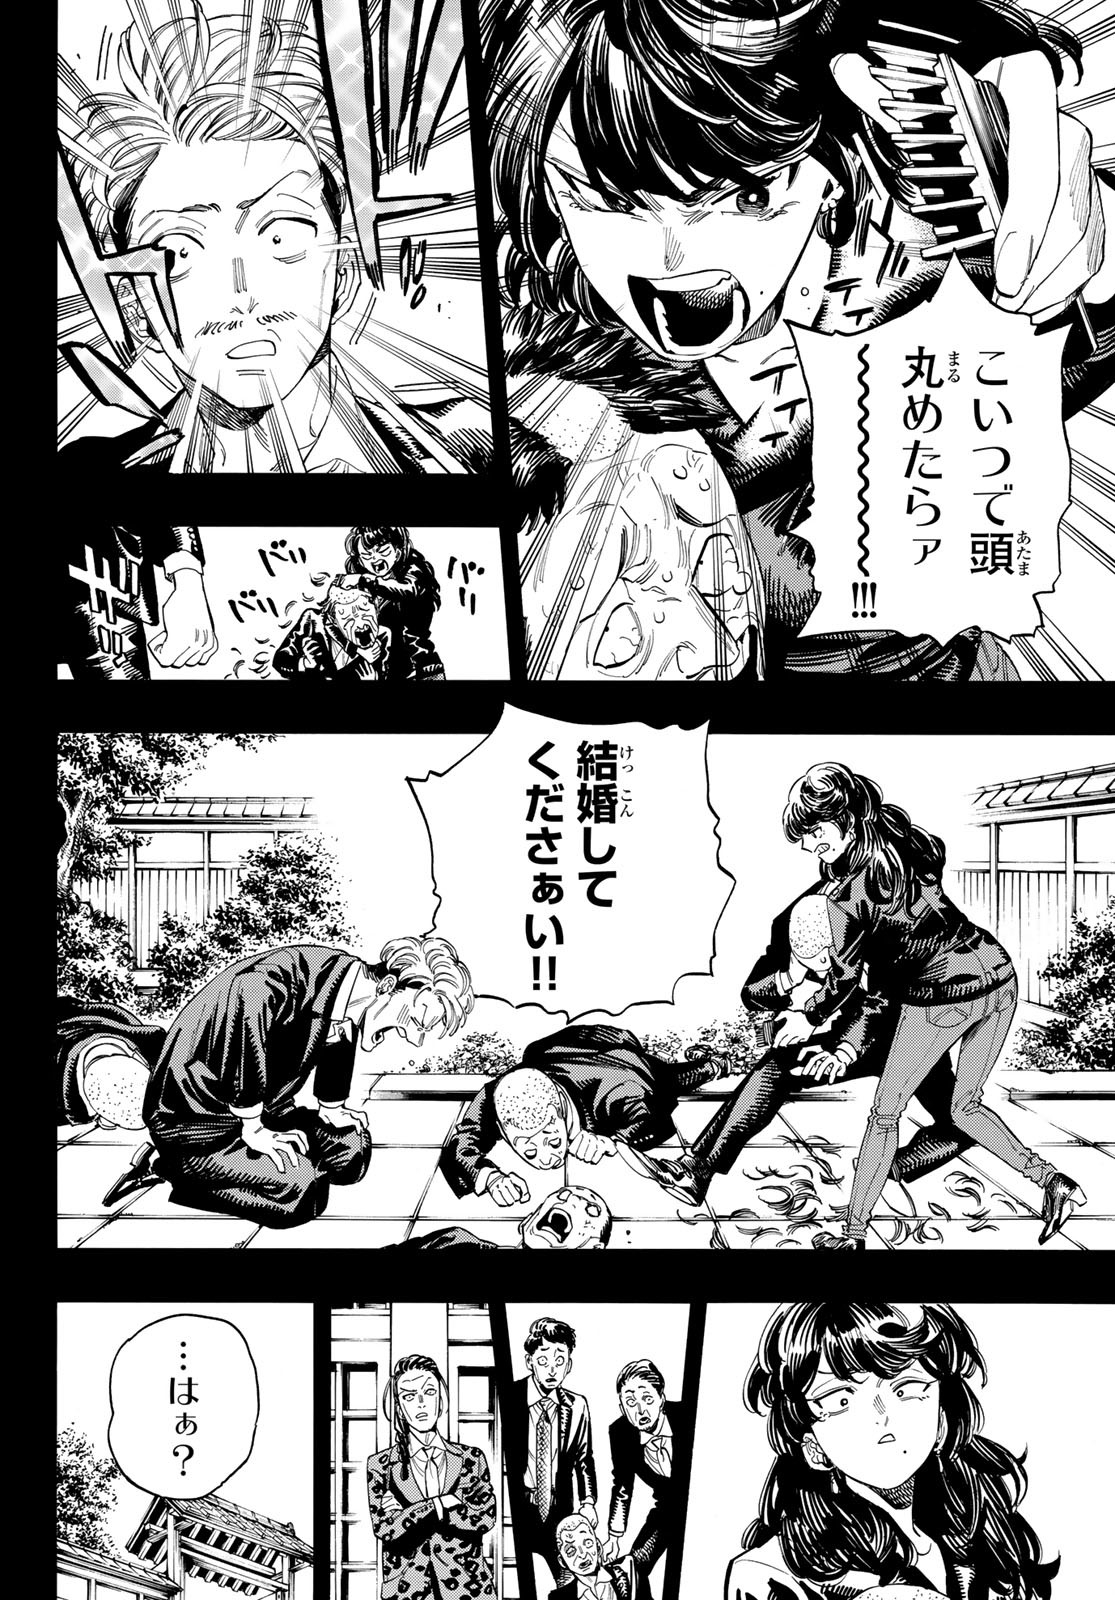 Akabane Honeko no Bodyguard - Chapter 61 - Page 2